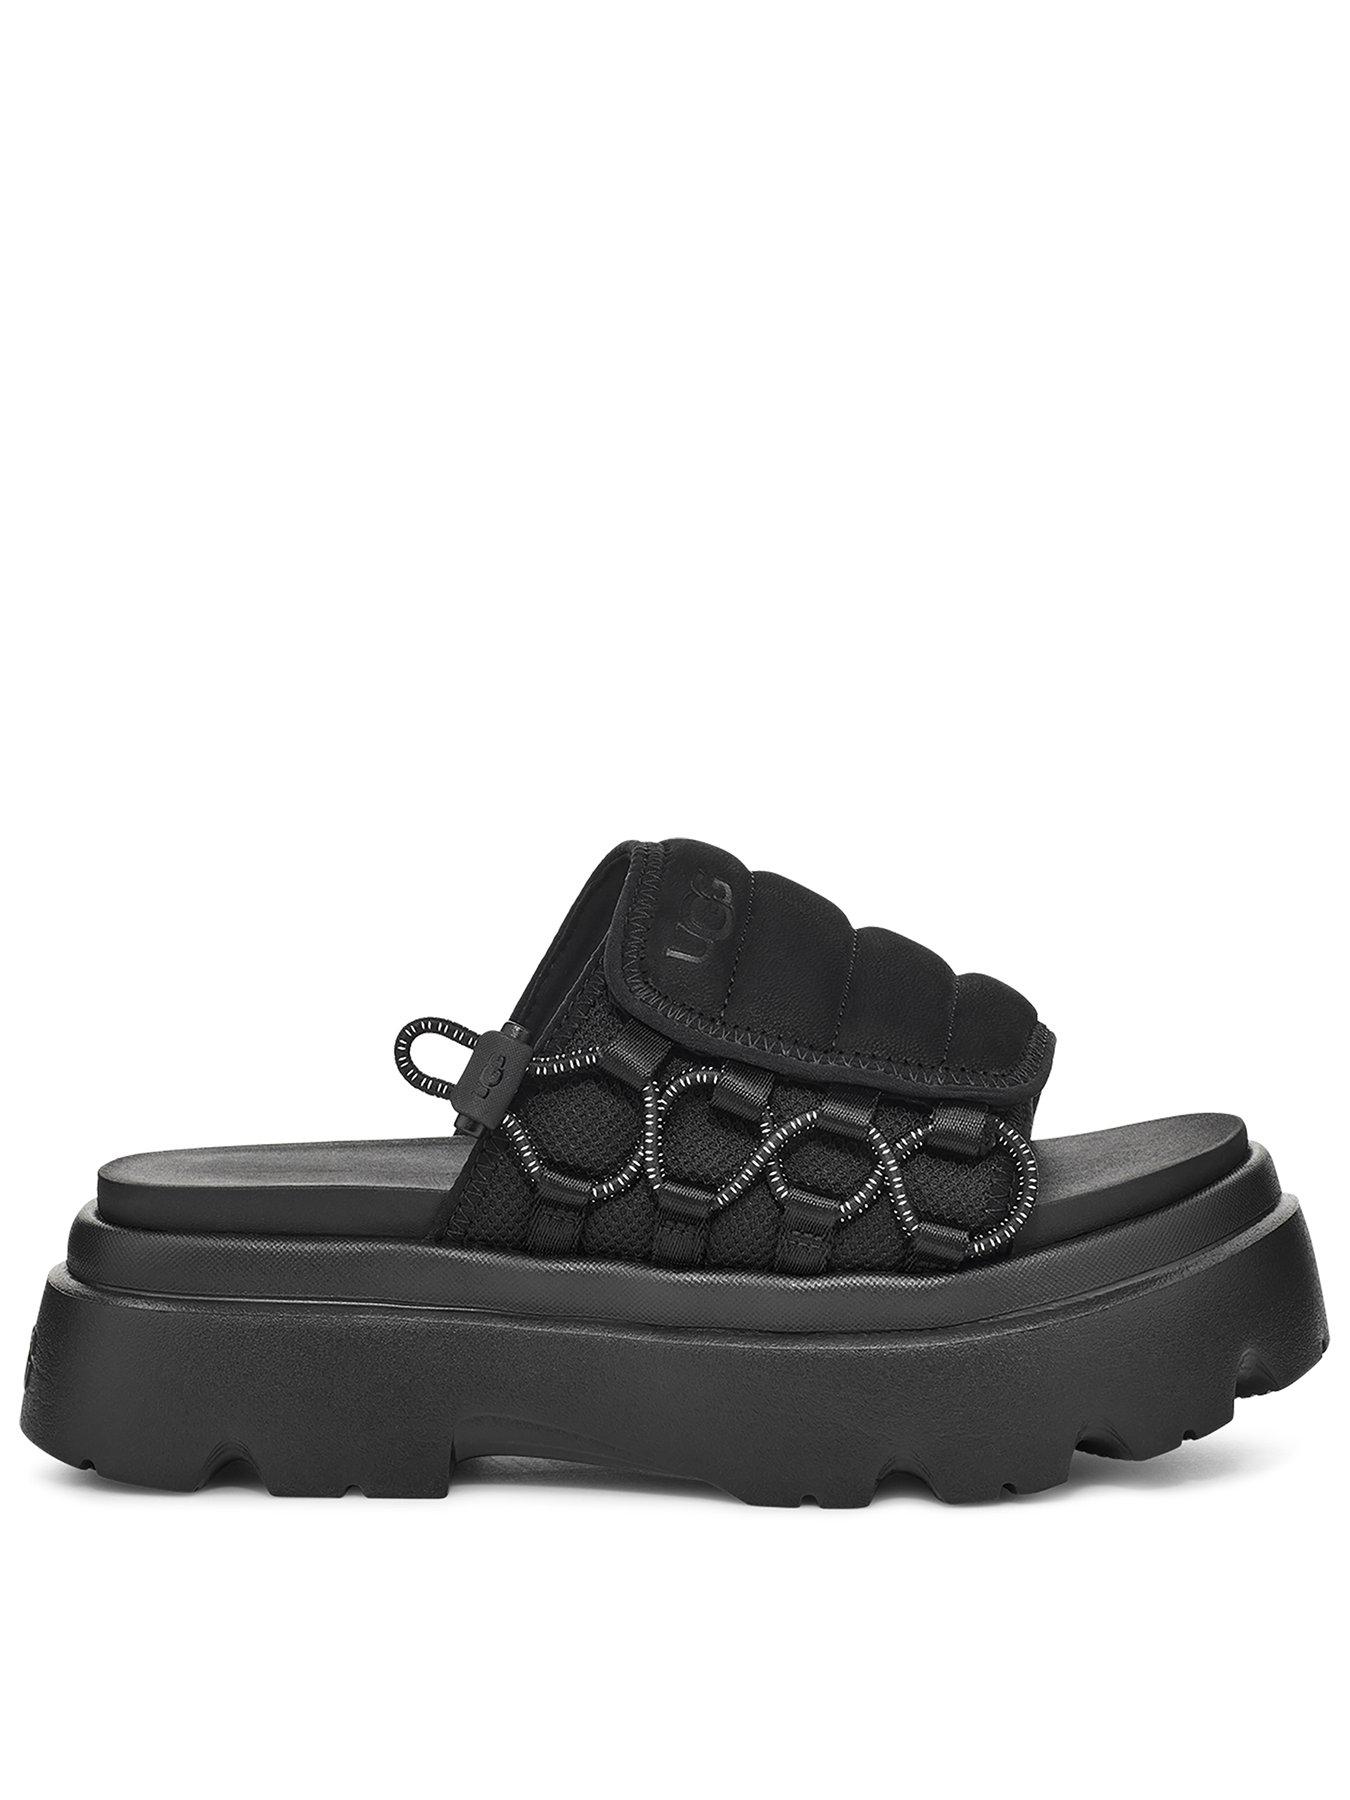 UGG Callie Black Sandal, Black, Size 5, Women